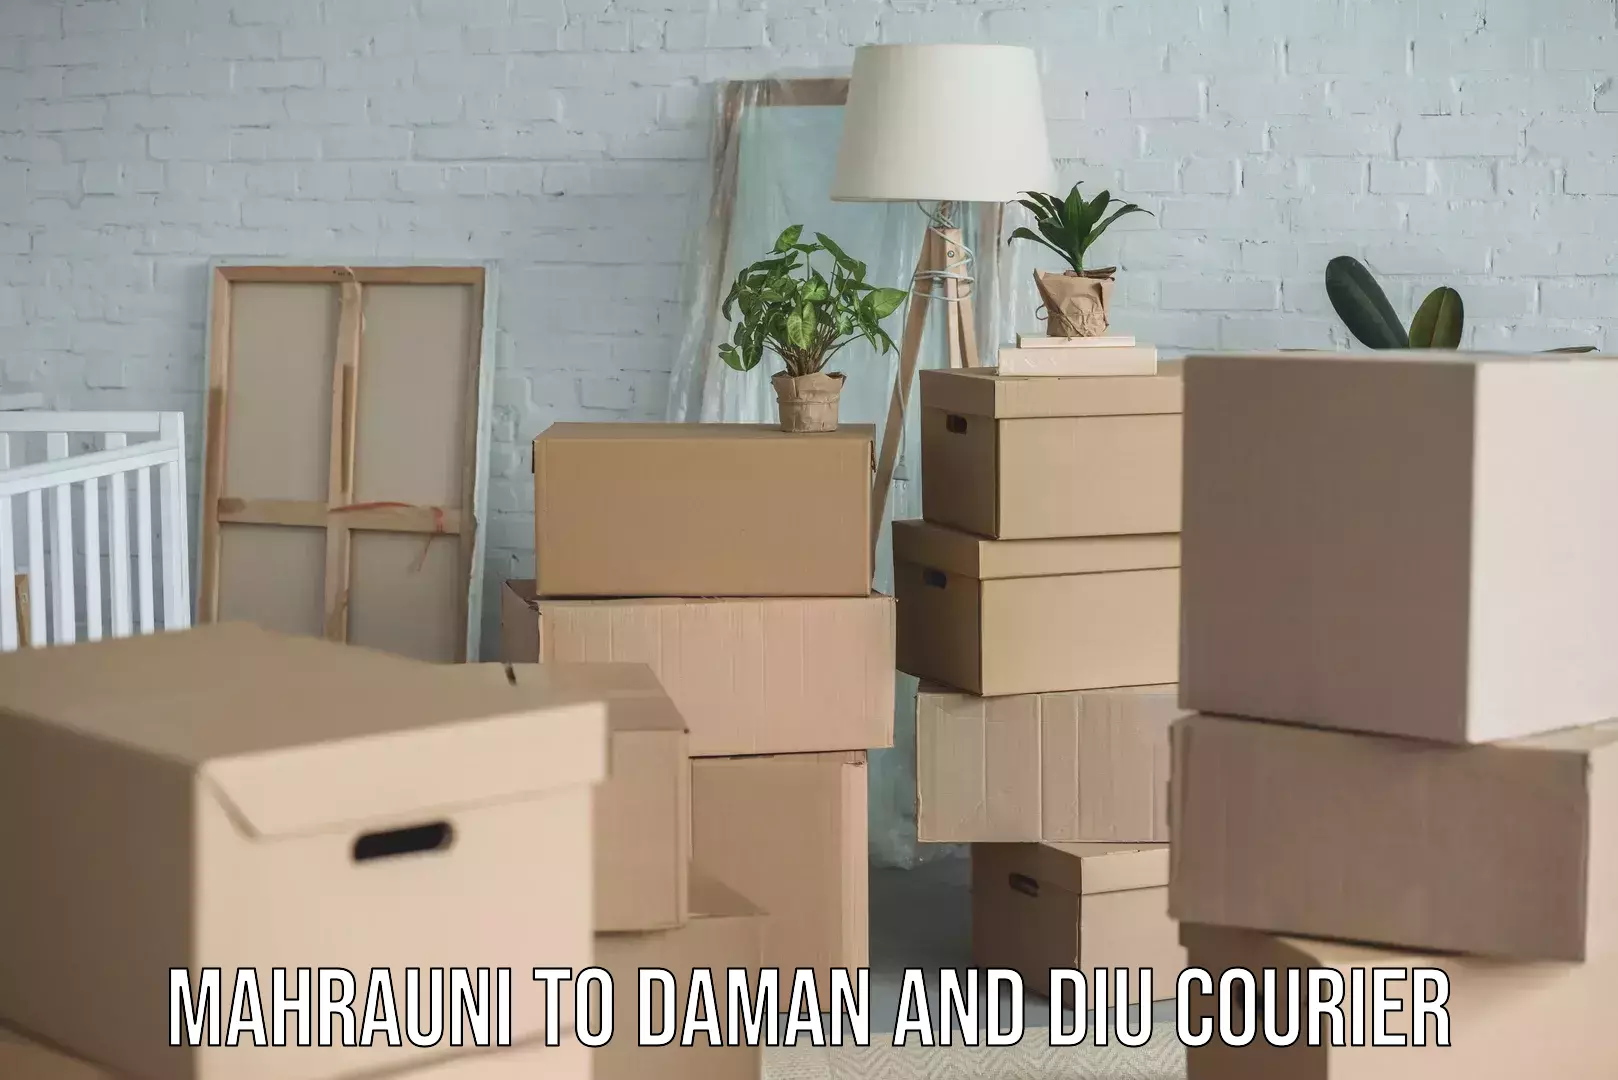 Professional moving company Mahrauni to Daman and Diu